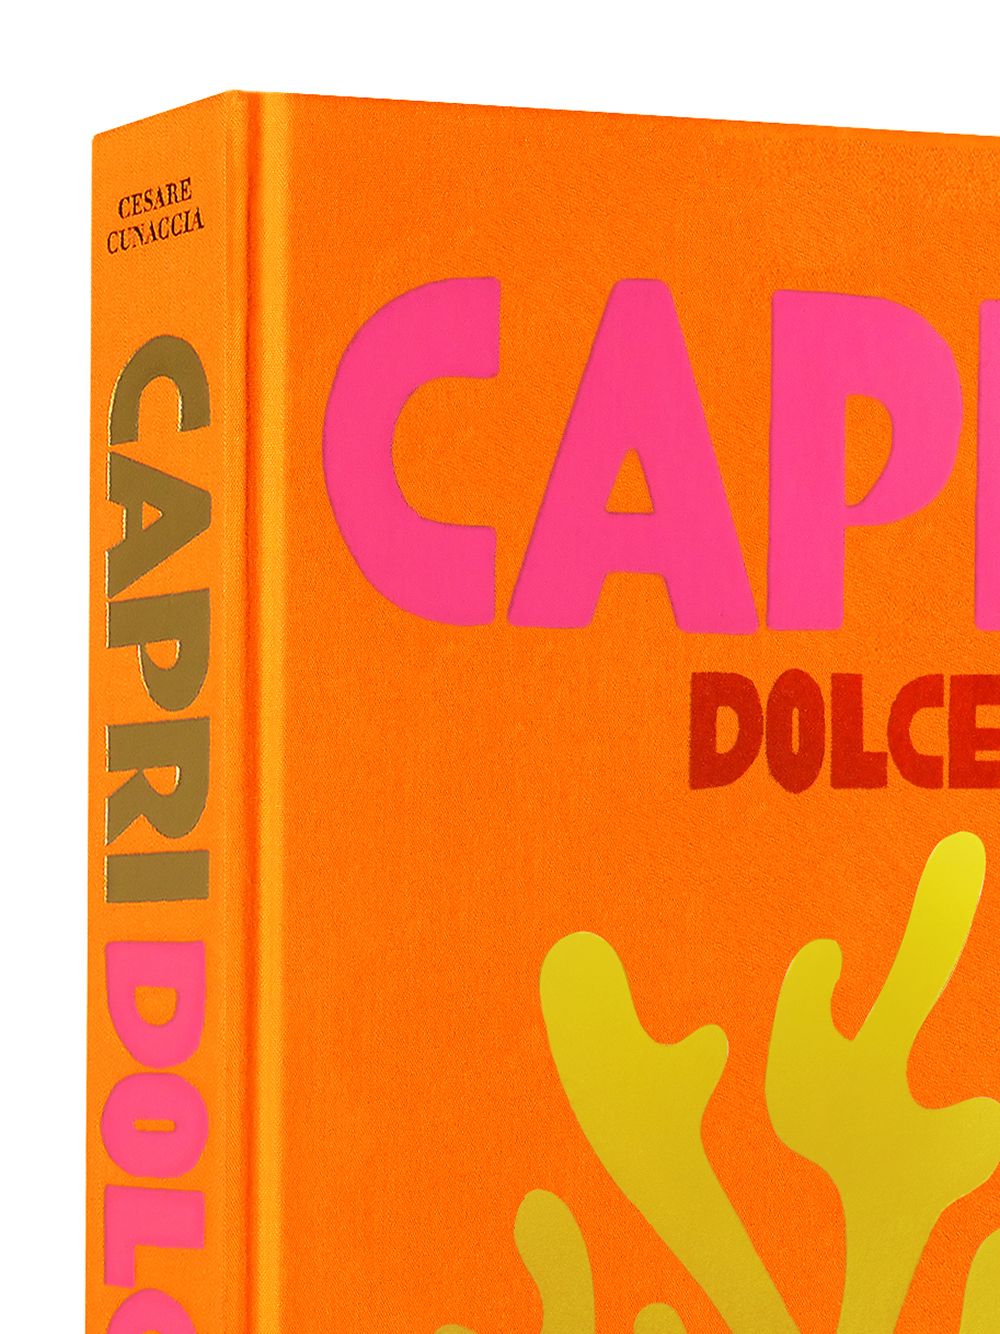 CAPRI DOLCE VITA BOOK - $105